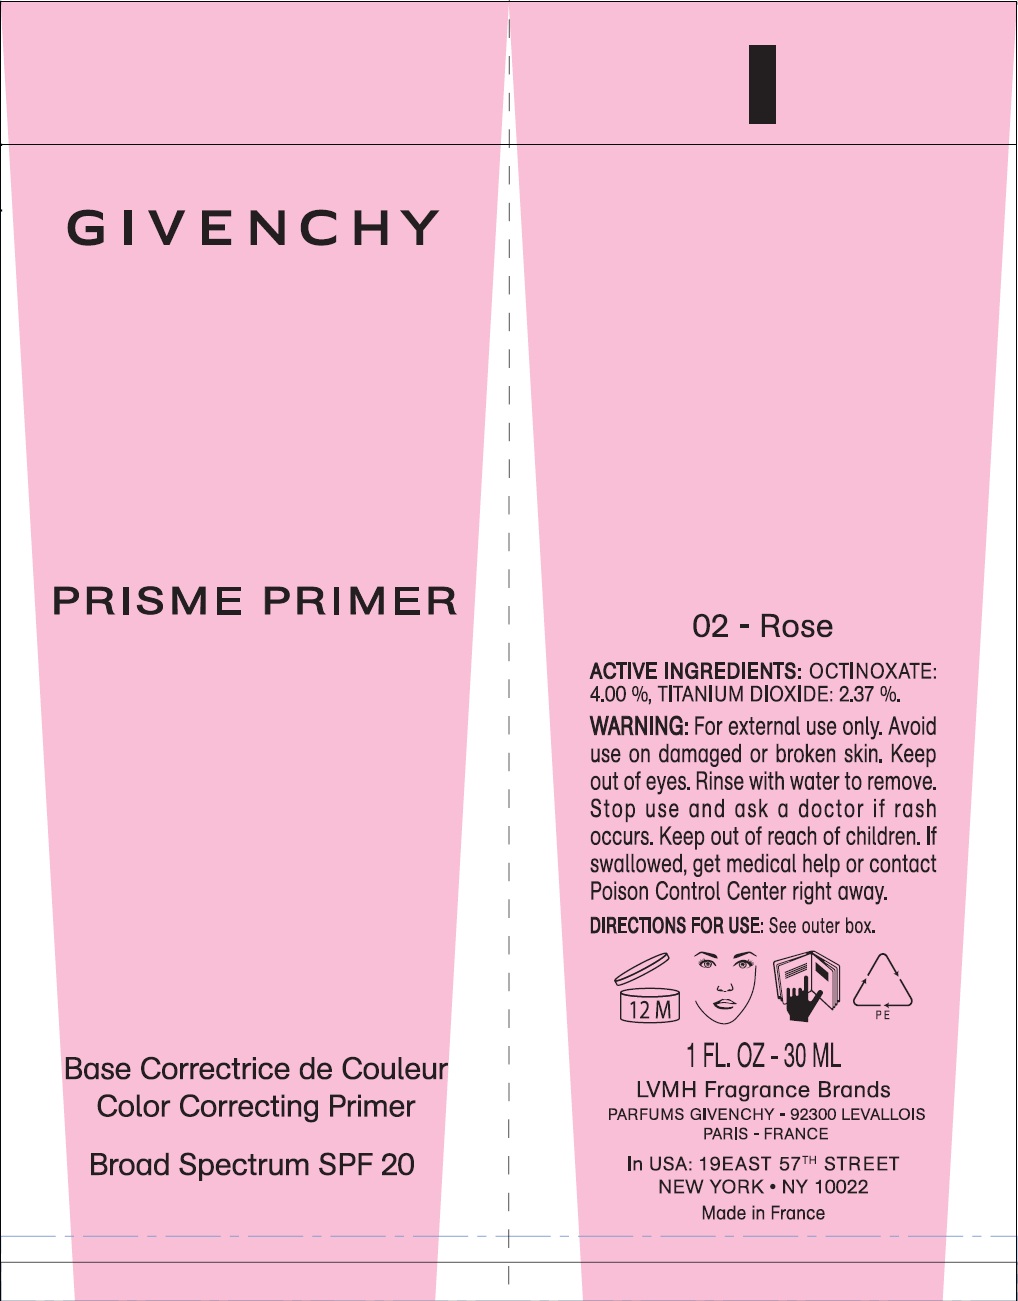 Is Prisme Primer Color Correcting Primer Spf 20 Pa Shade 02 Rose | Octinoxate, Titanium Dioxide Cream safe while breastfeeding